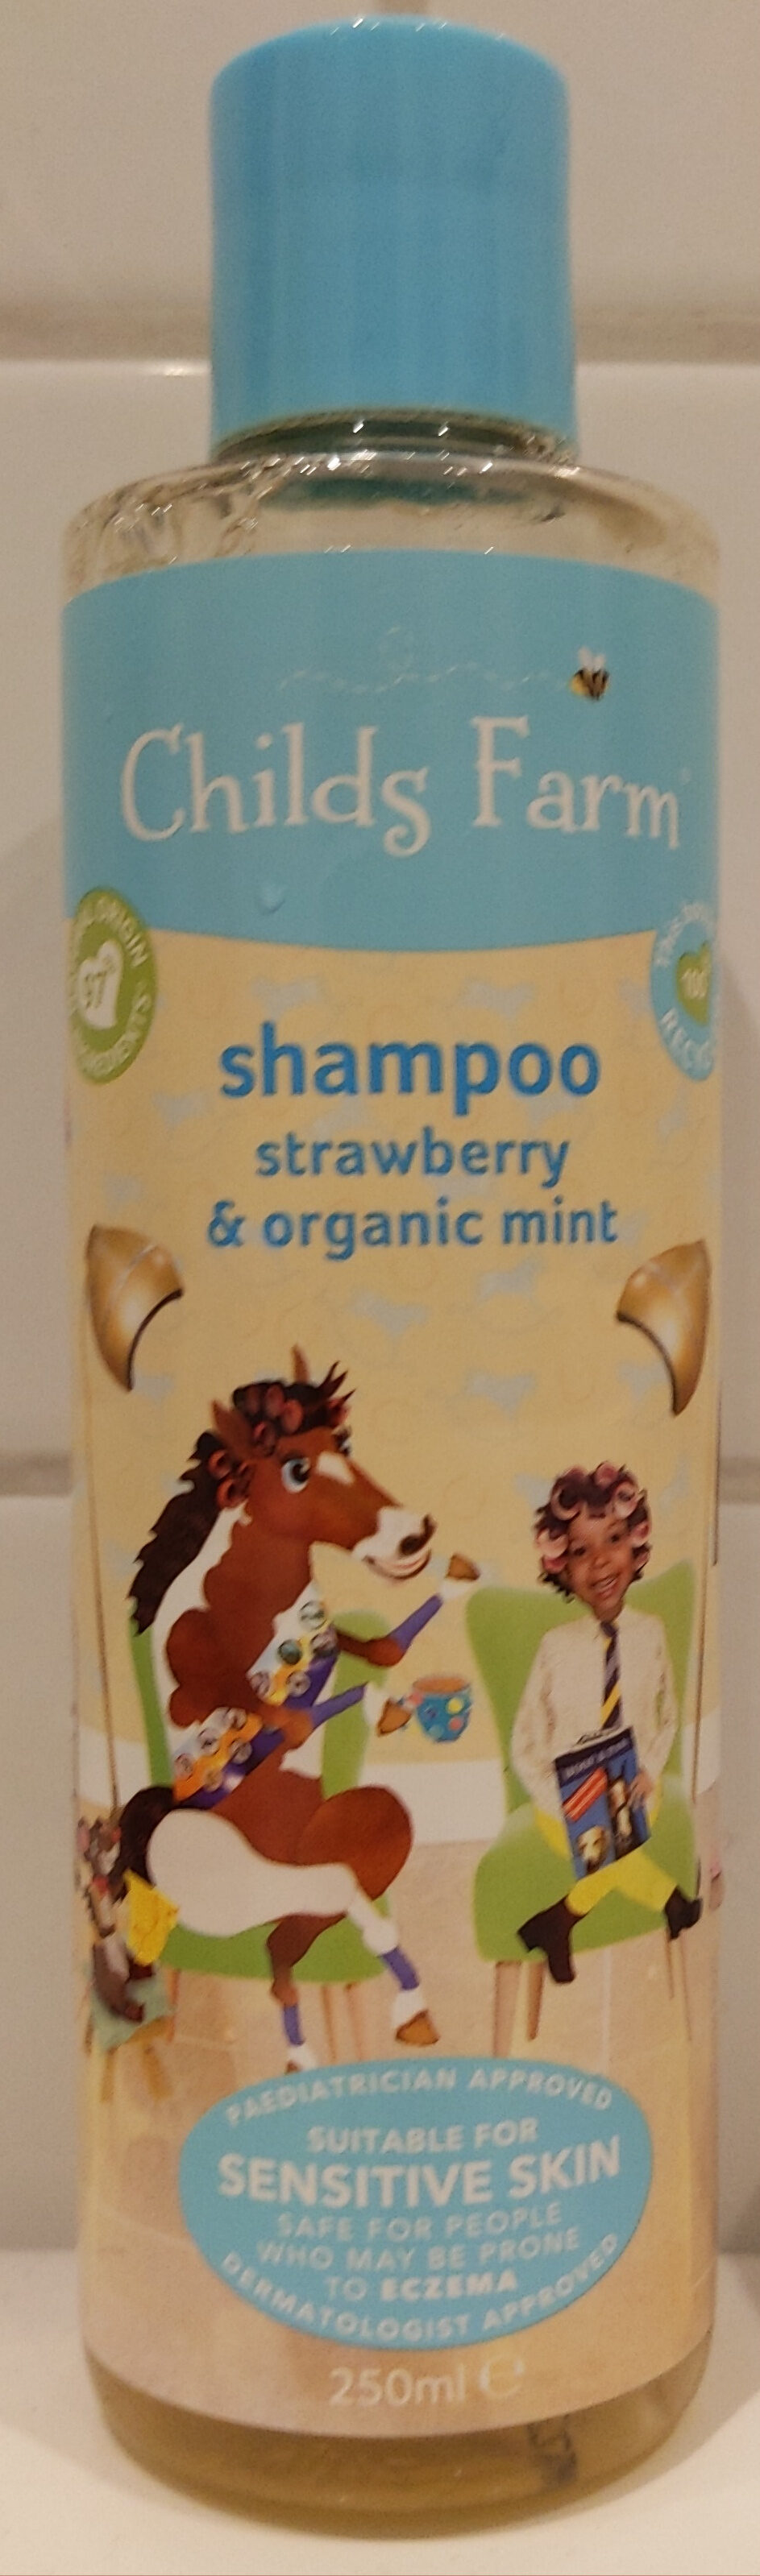 Strawberry and organic mint shampoo - Produit - en